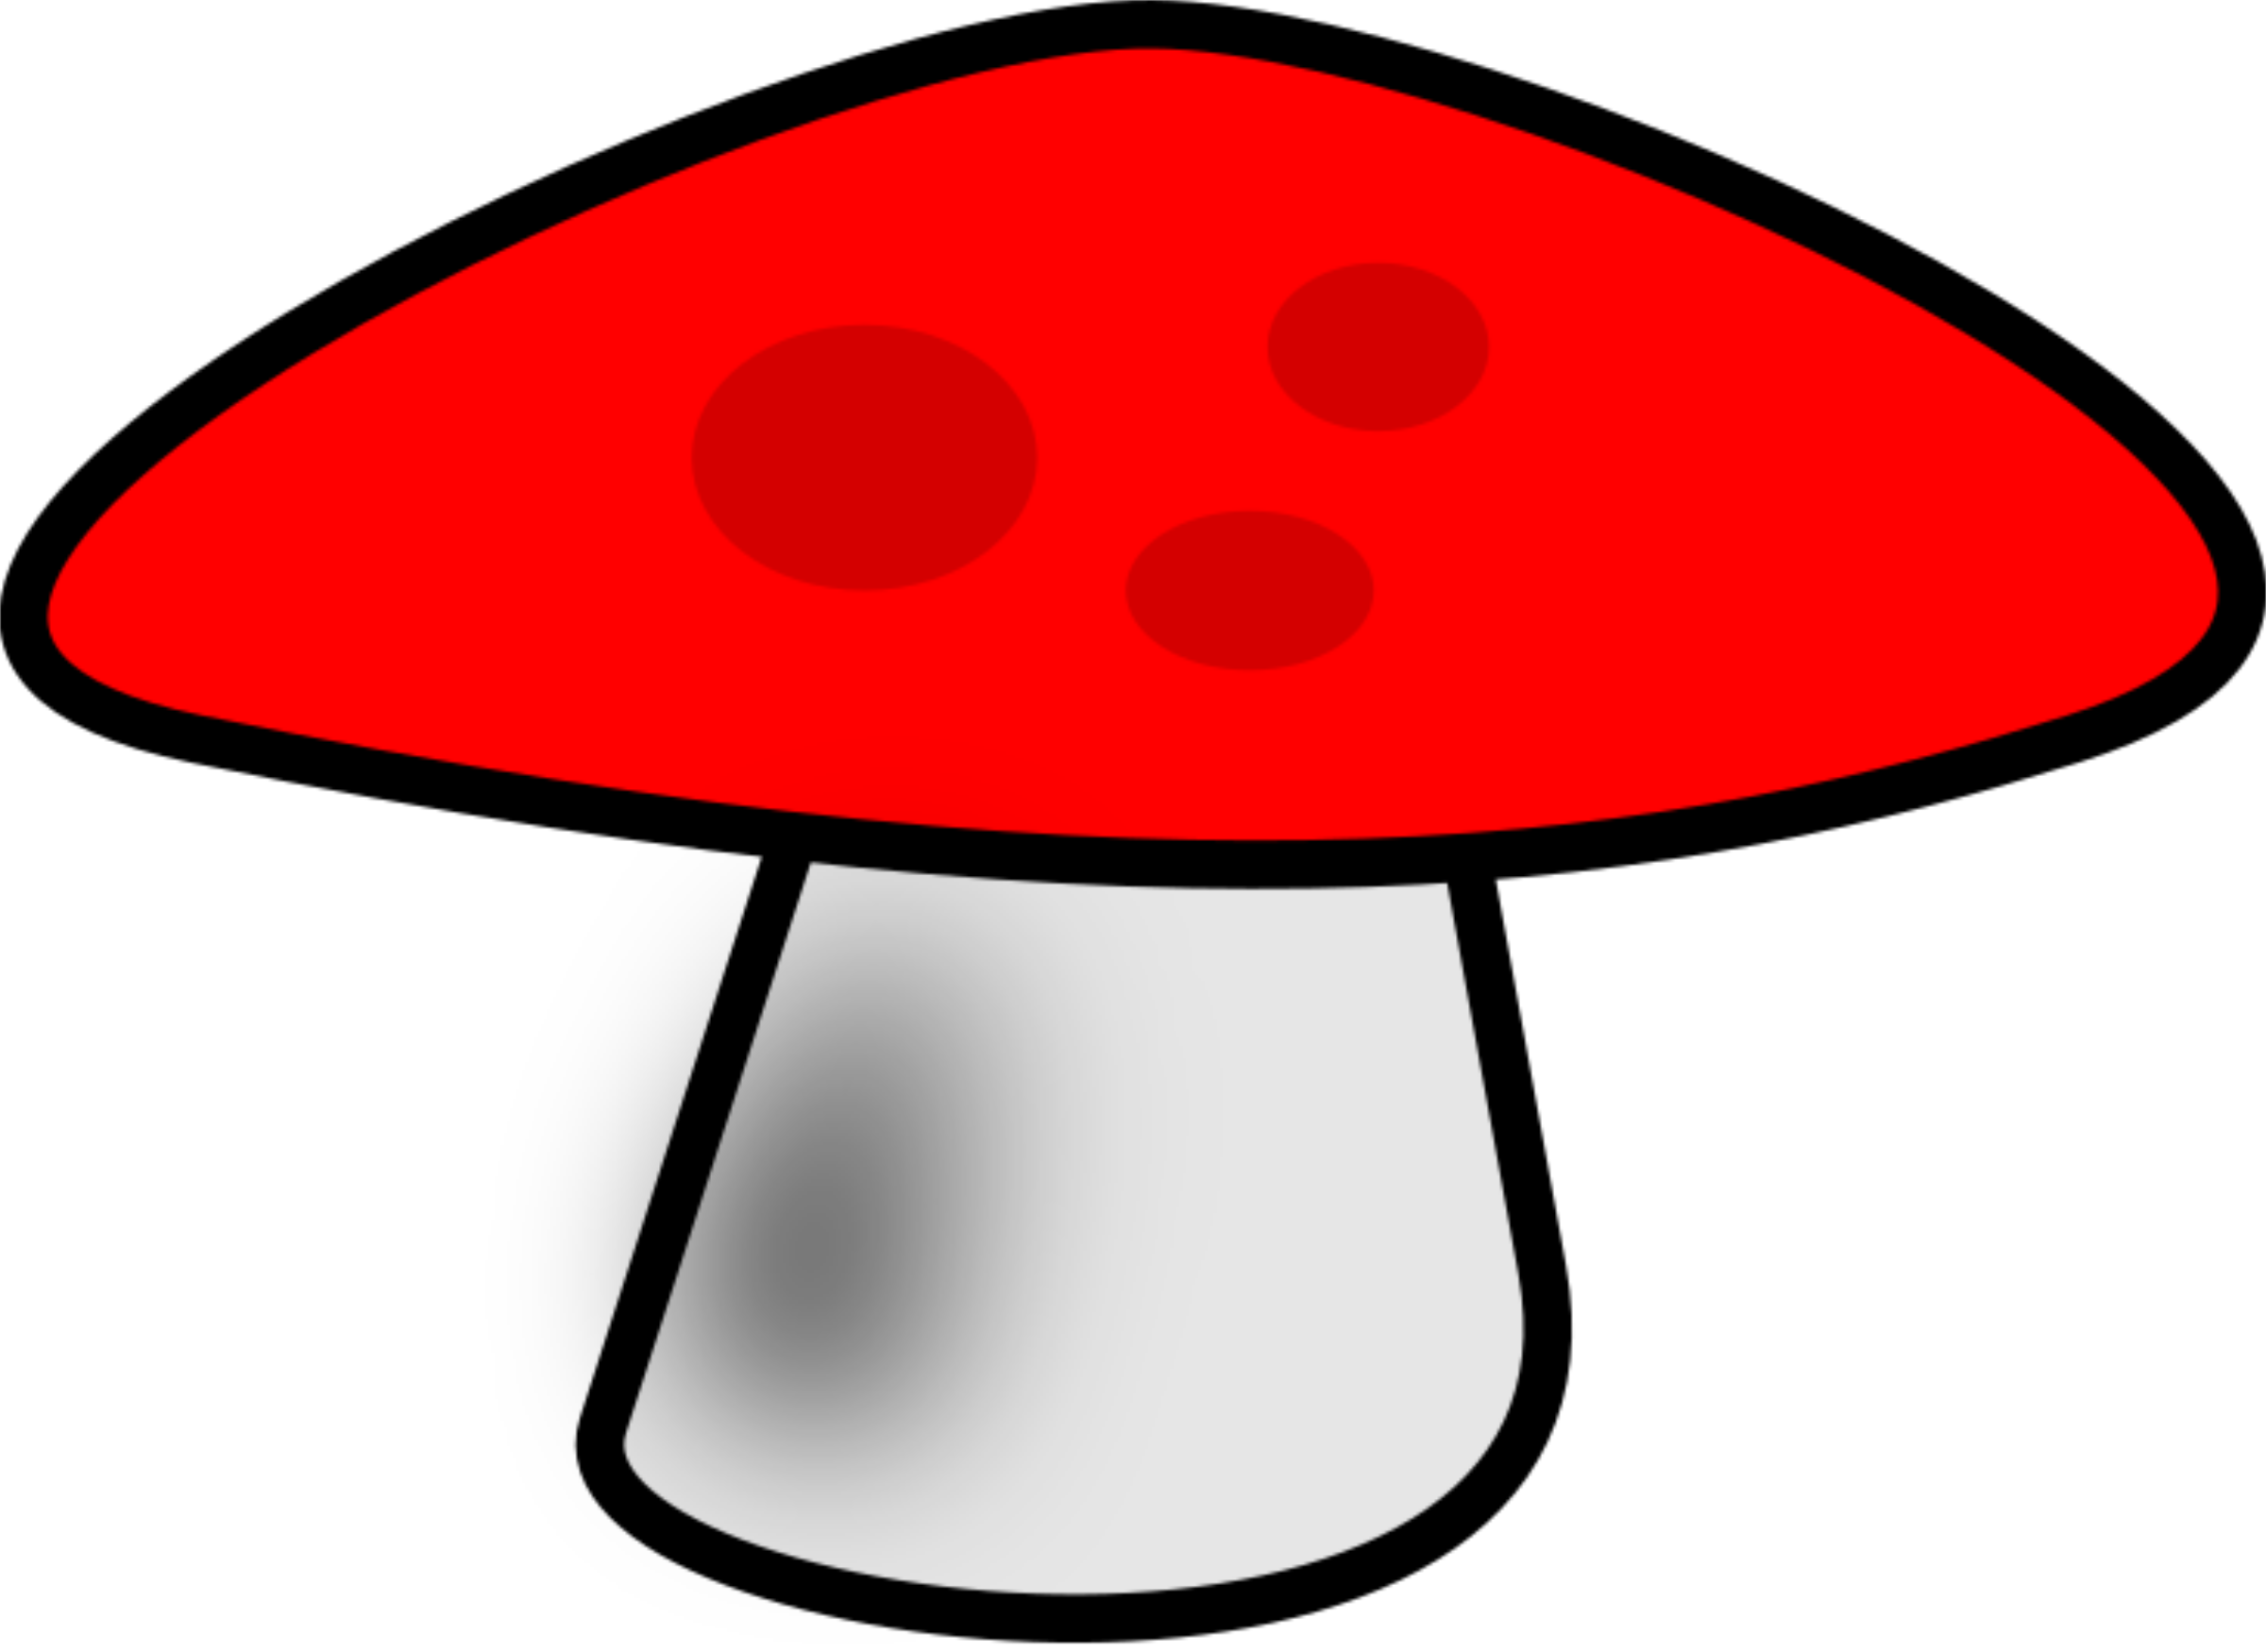 mushroom clipart red mushroom